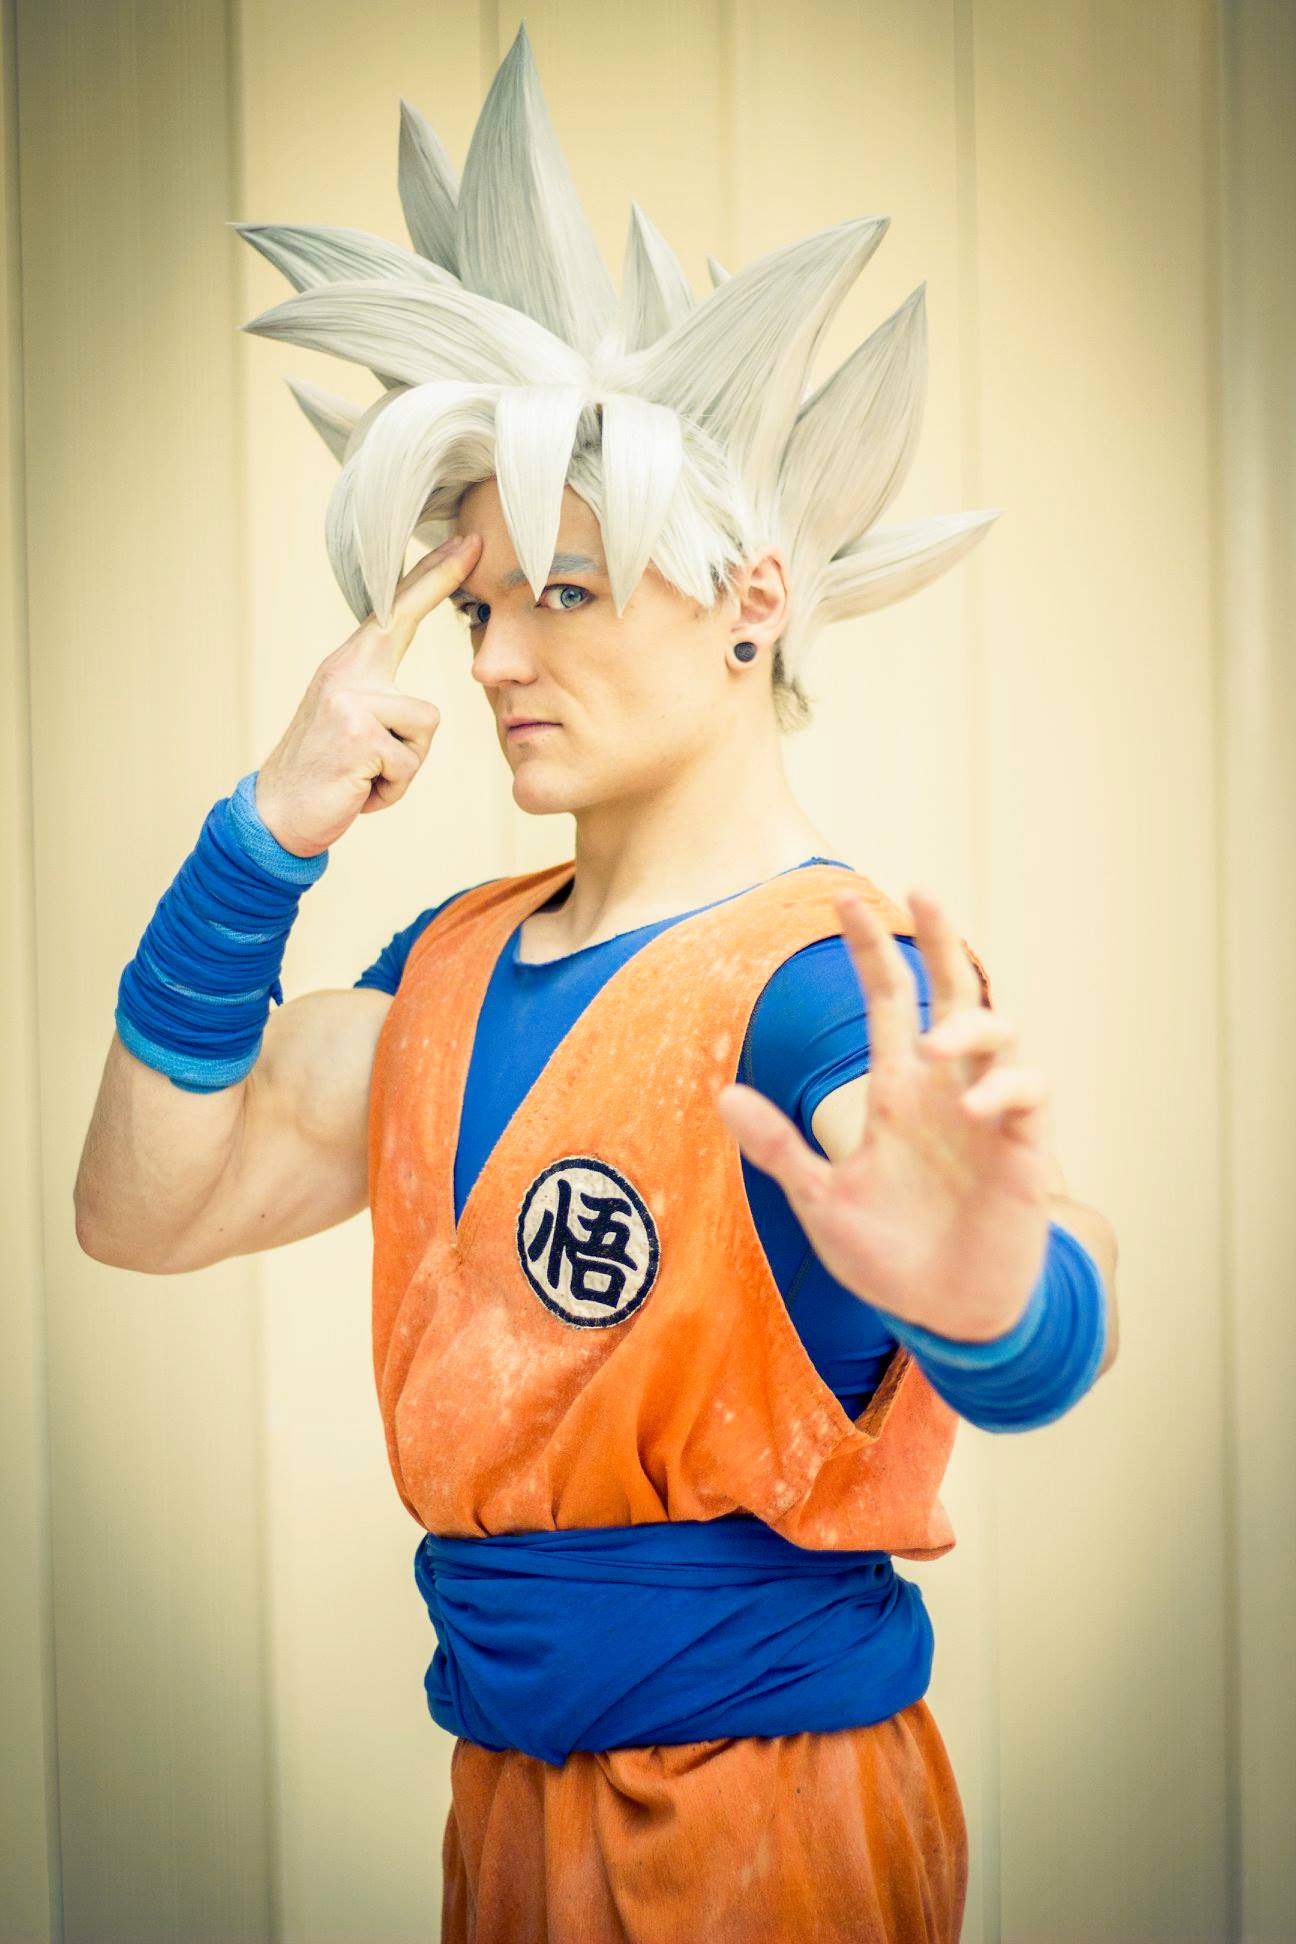 Mastered ultra instinct Goku cosplay from DragonBall Super